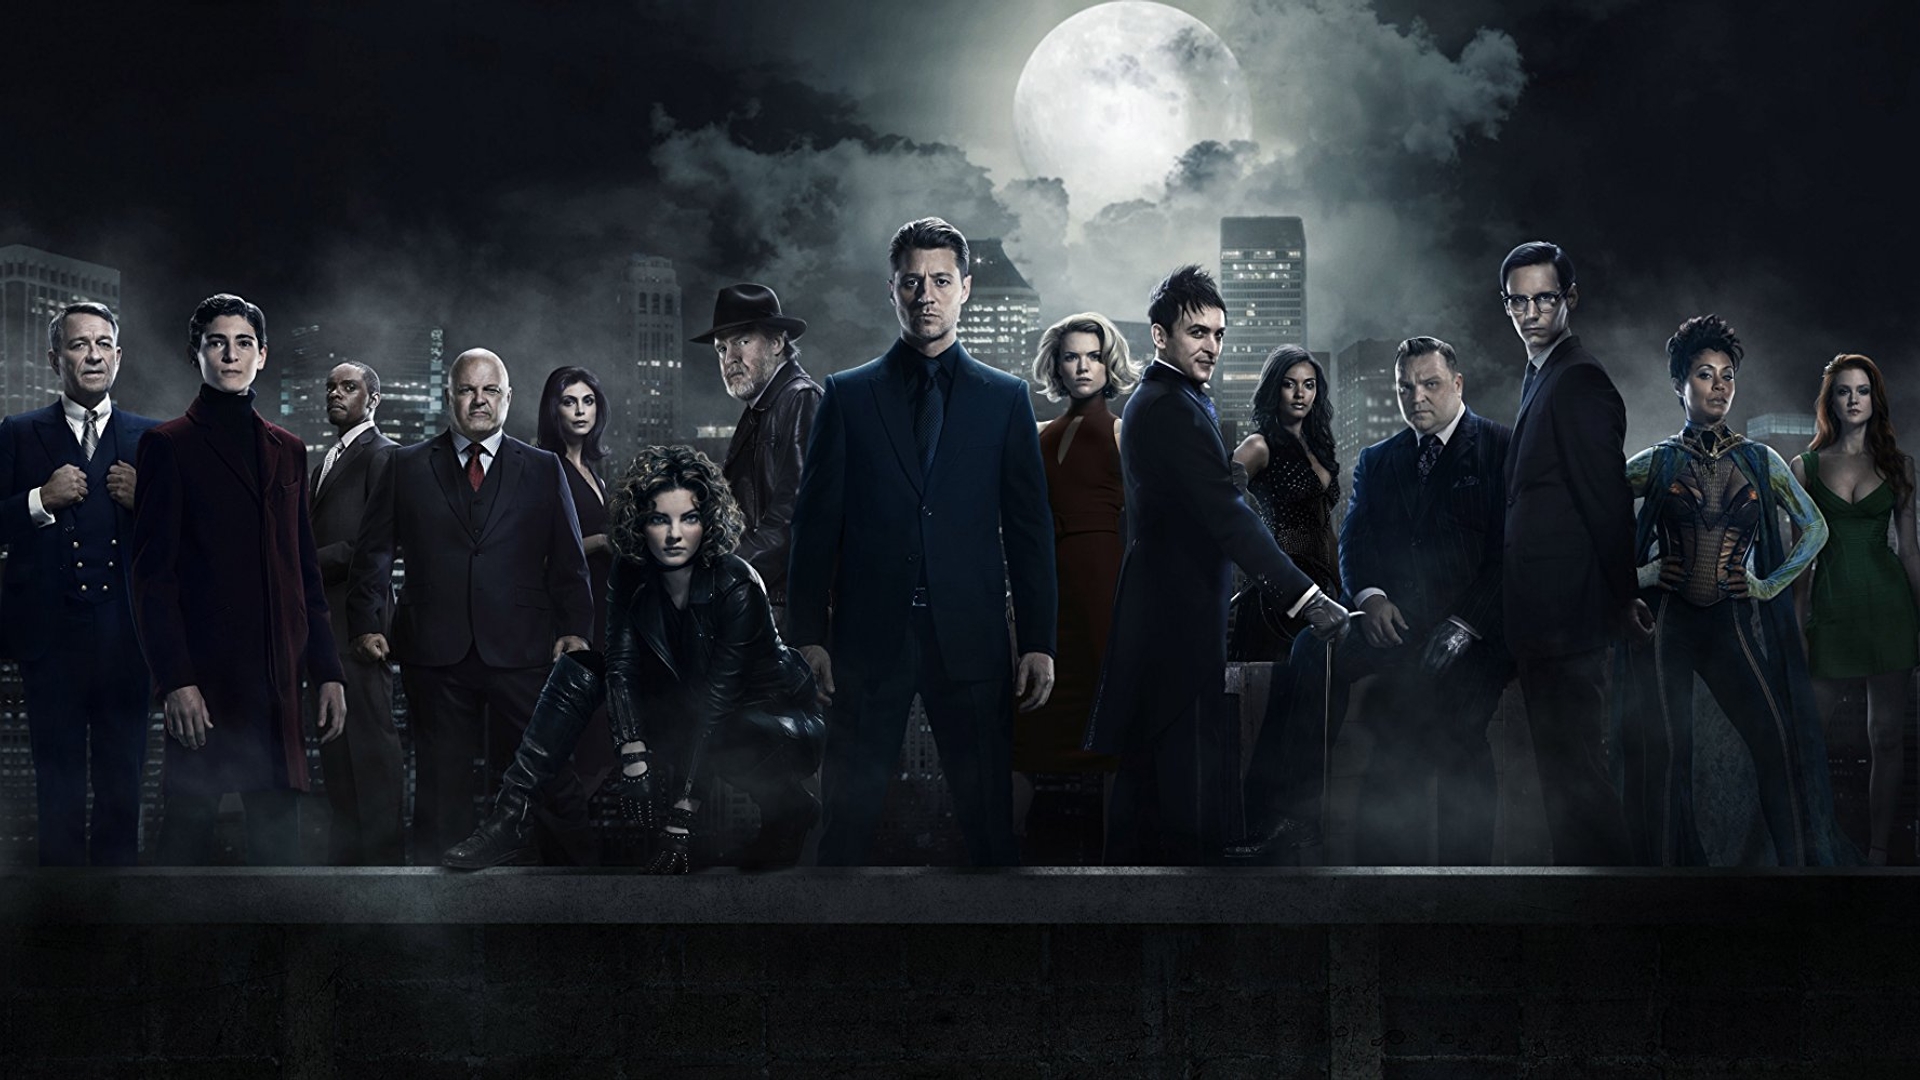 Gotham cast